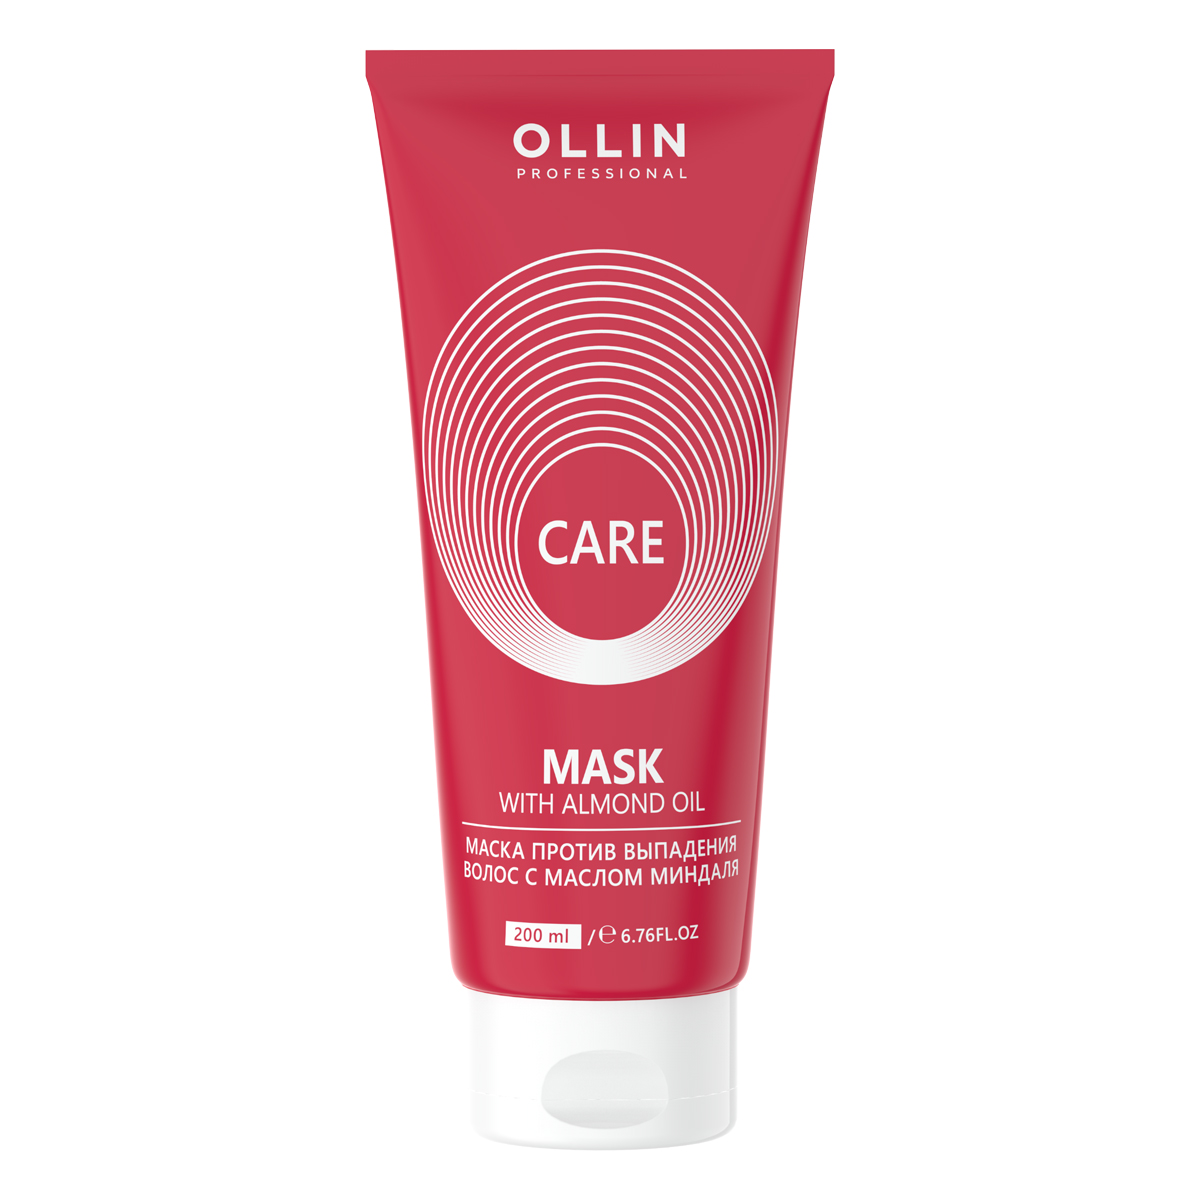 Ollin Professional Маска против выпадения волос с маслом миндаля, 200 мл (Ollin Professional, Care)